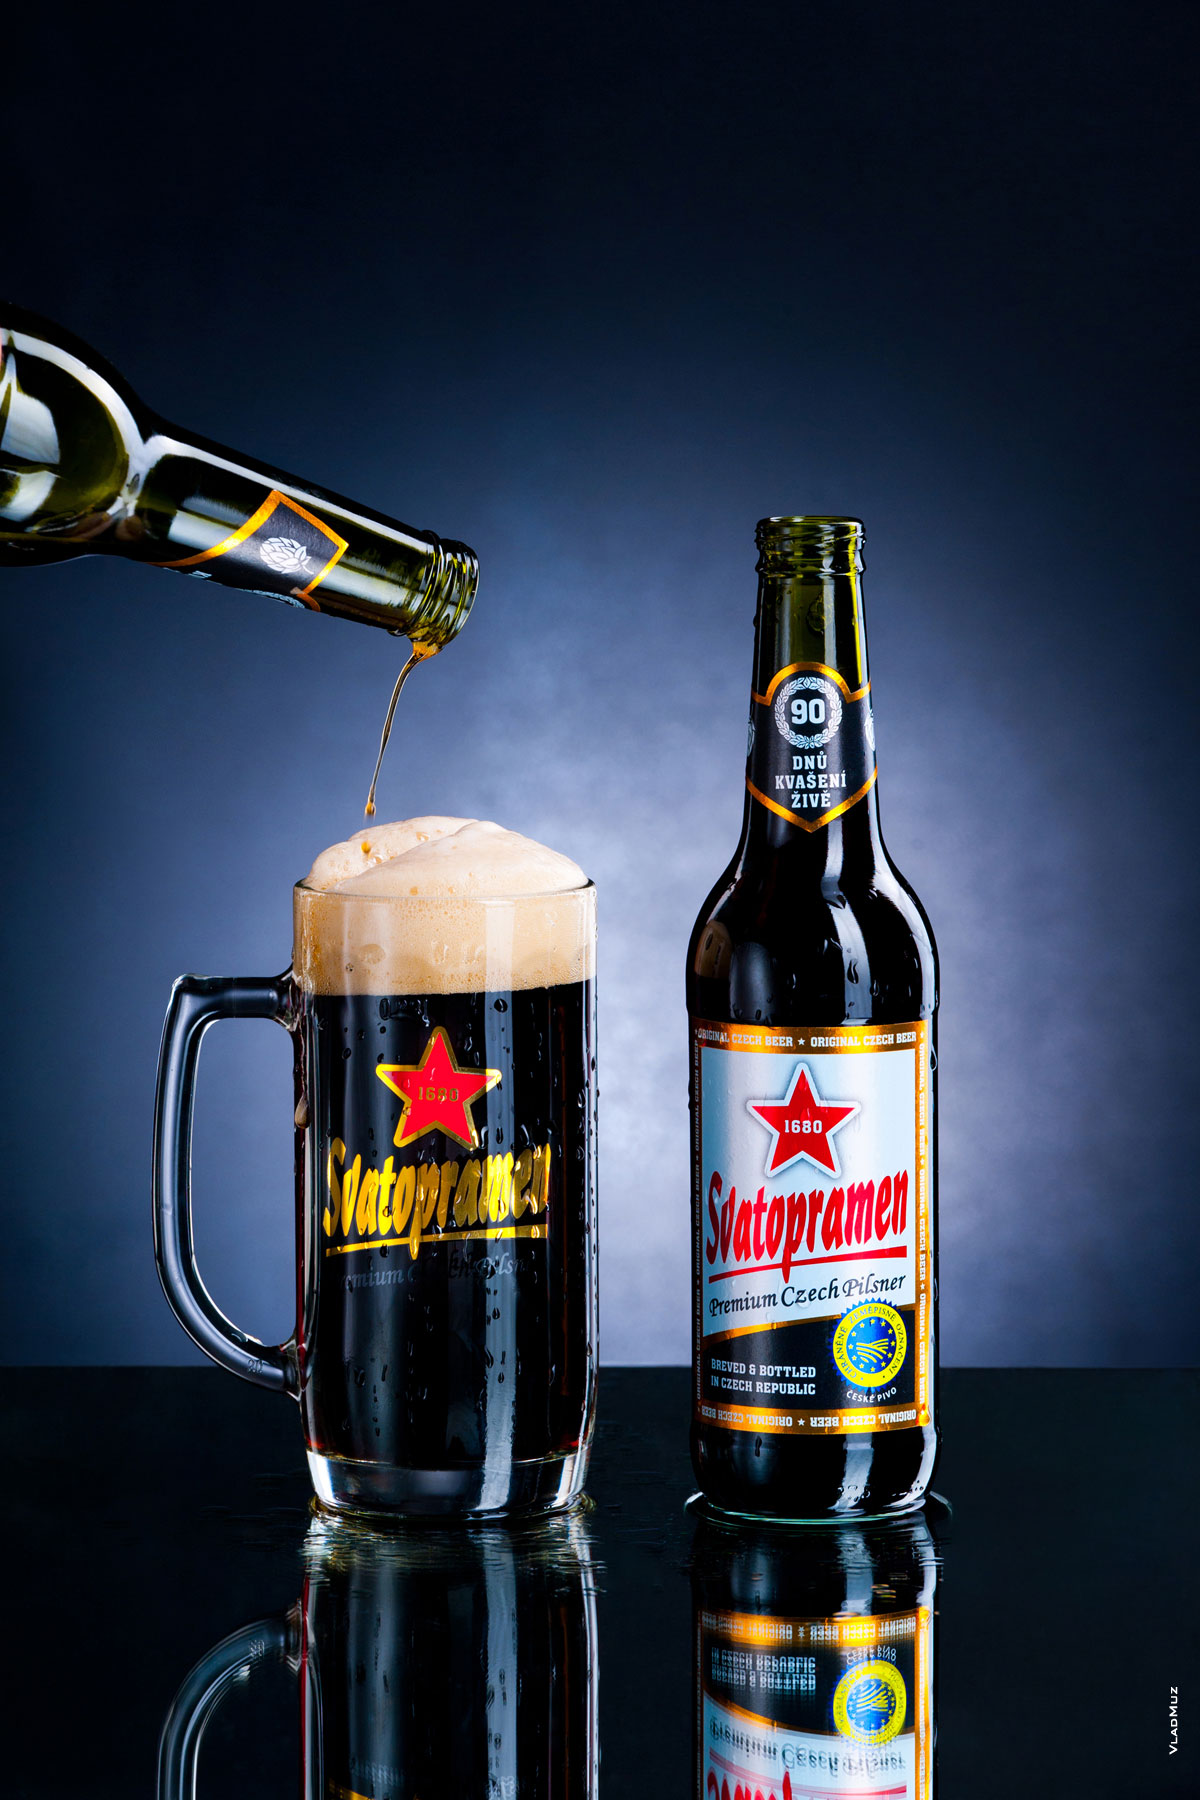 Фото пива Святопрамен: в конце розлива на темном бокале получается светло-бежевая шапка